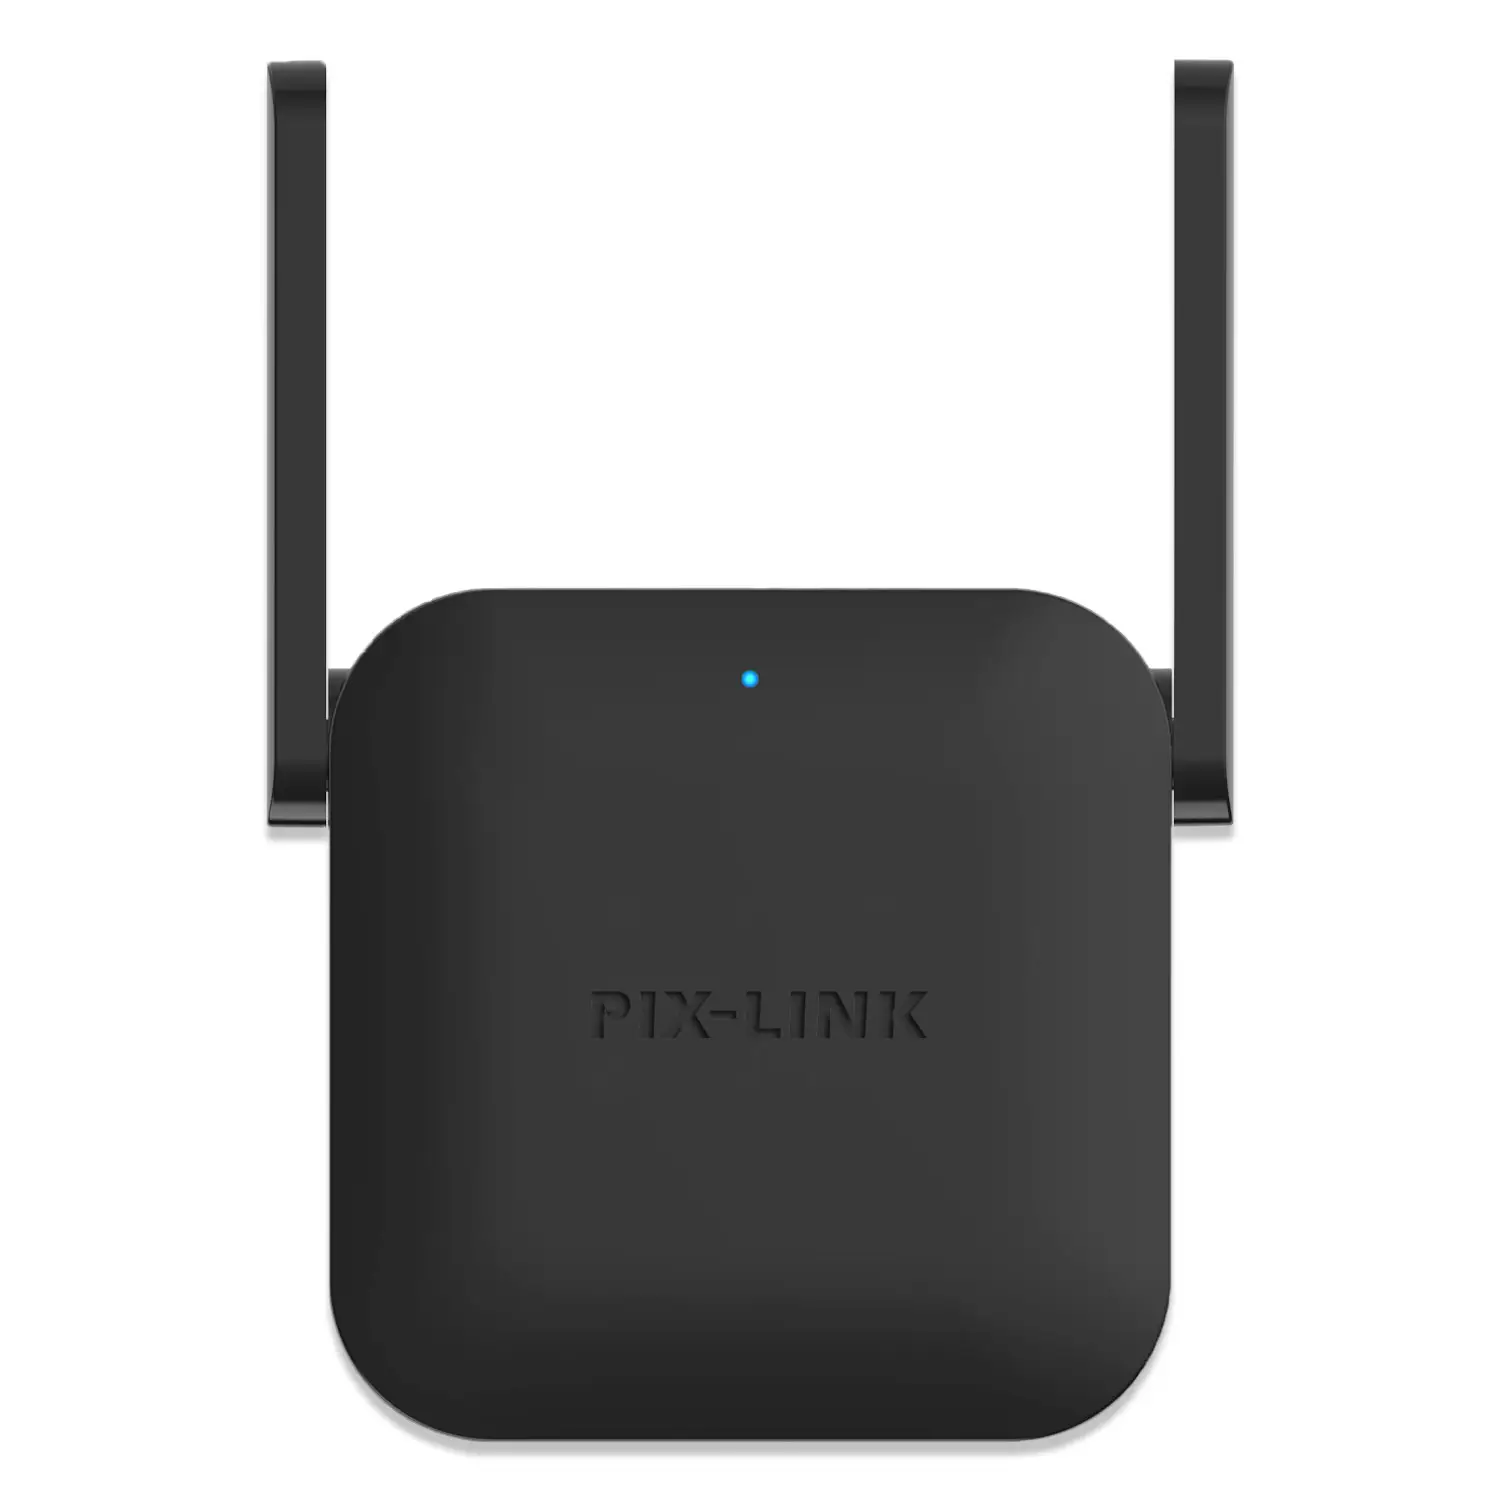 PIX-LINK新モデル802.11b/g/n 300Mbps Wifiリピーターブースターエクステンダー家庭用